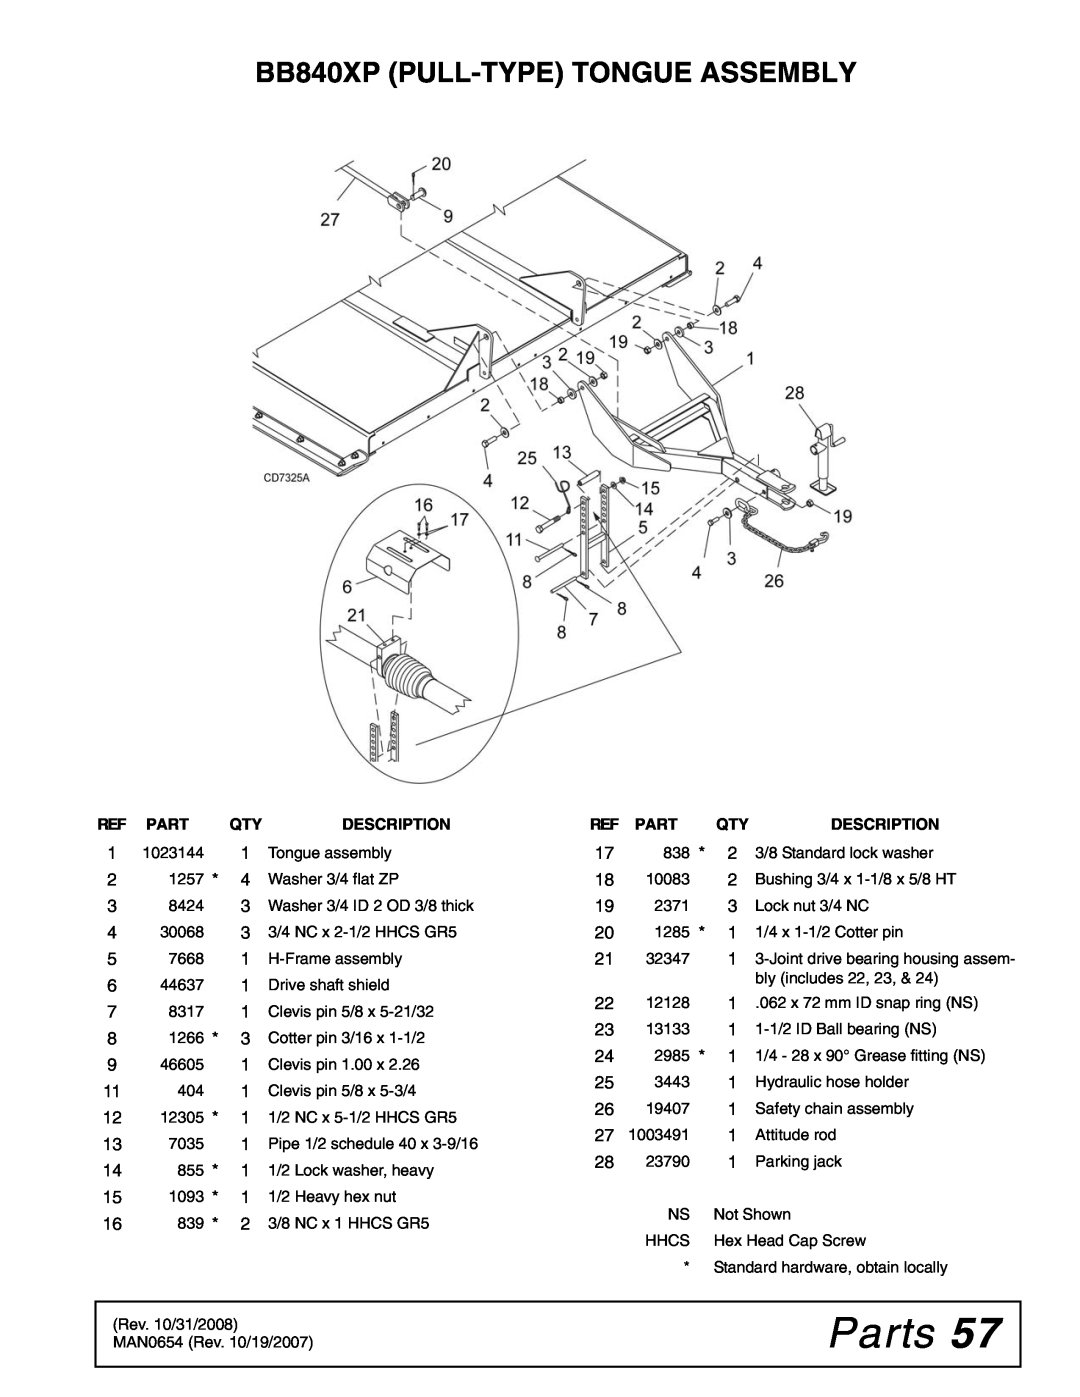 Woods Equipment BB600X, BB720X manual BB840XP PULL-TYPE TONGUE ASSEMBLY, Parts, Description 